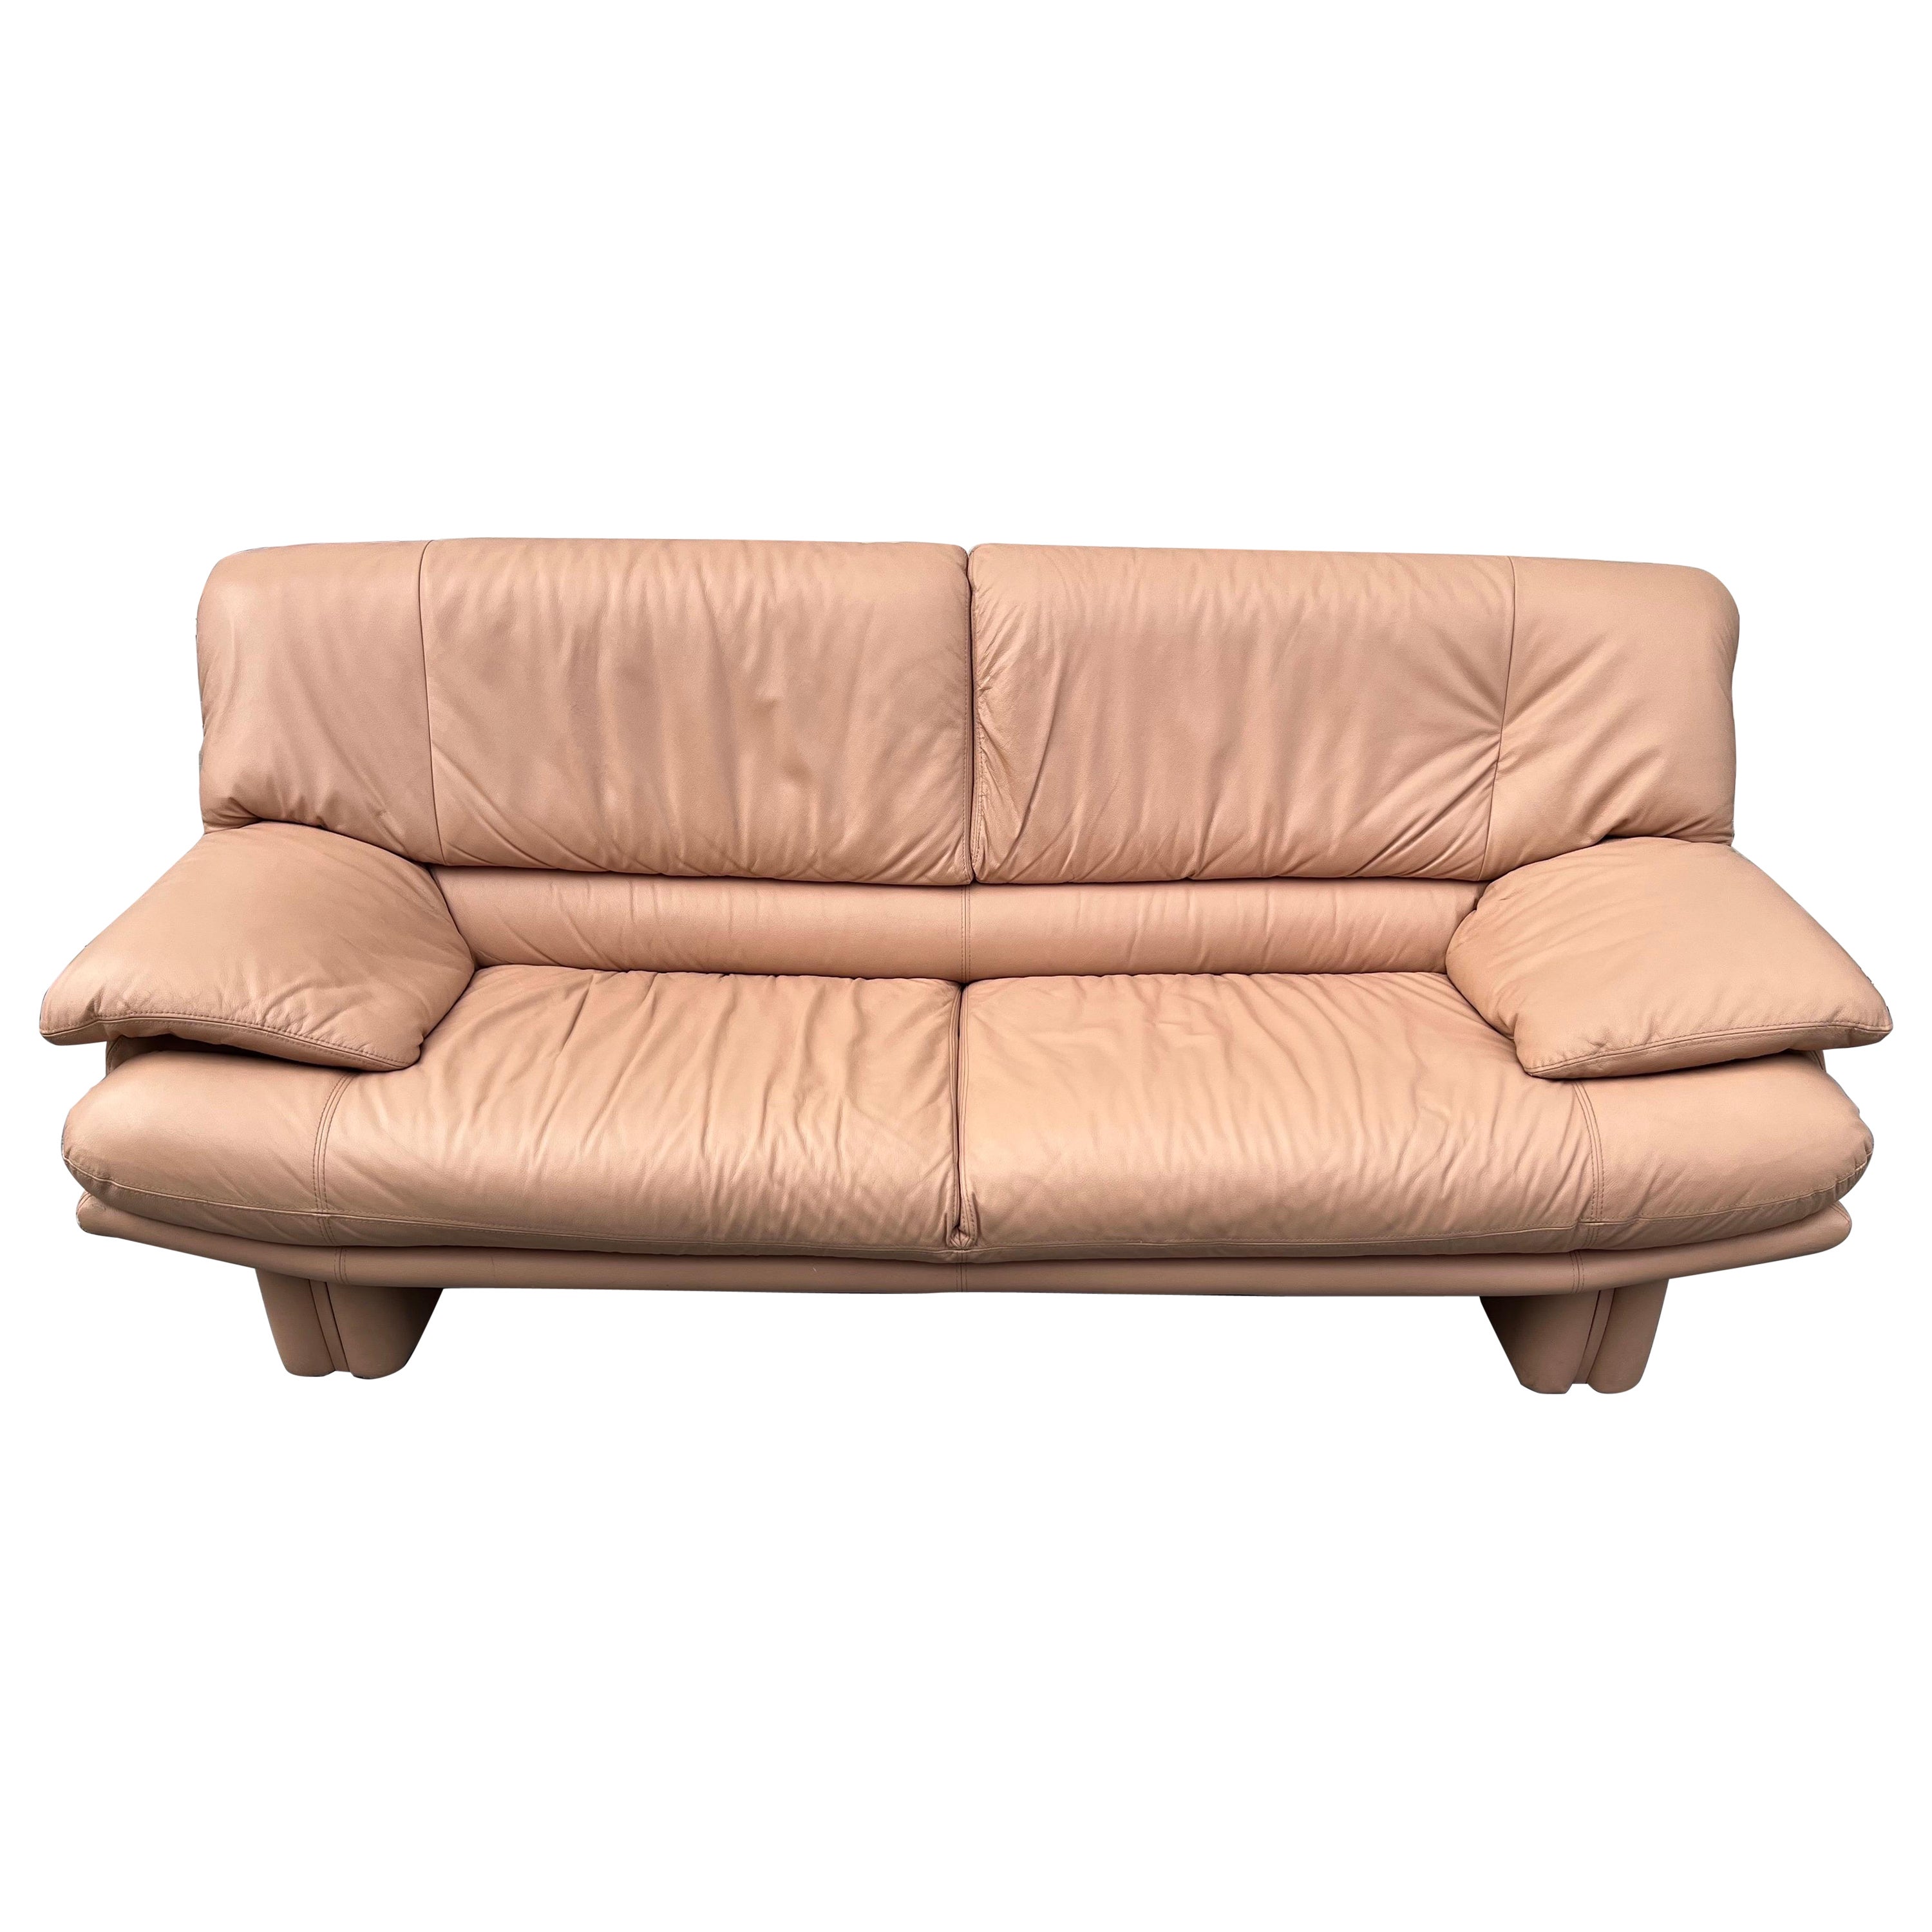 1980 Postmodern Peach Neutral Leather Sofa For Sale